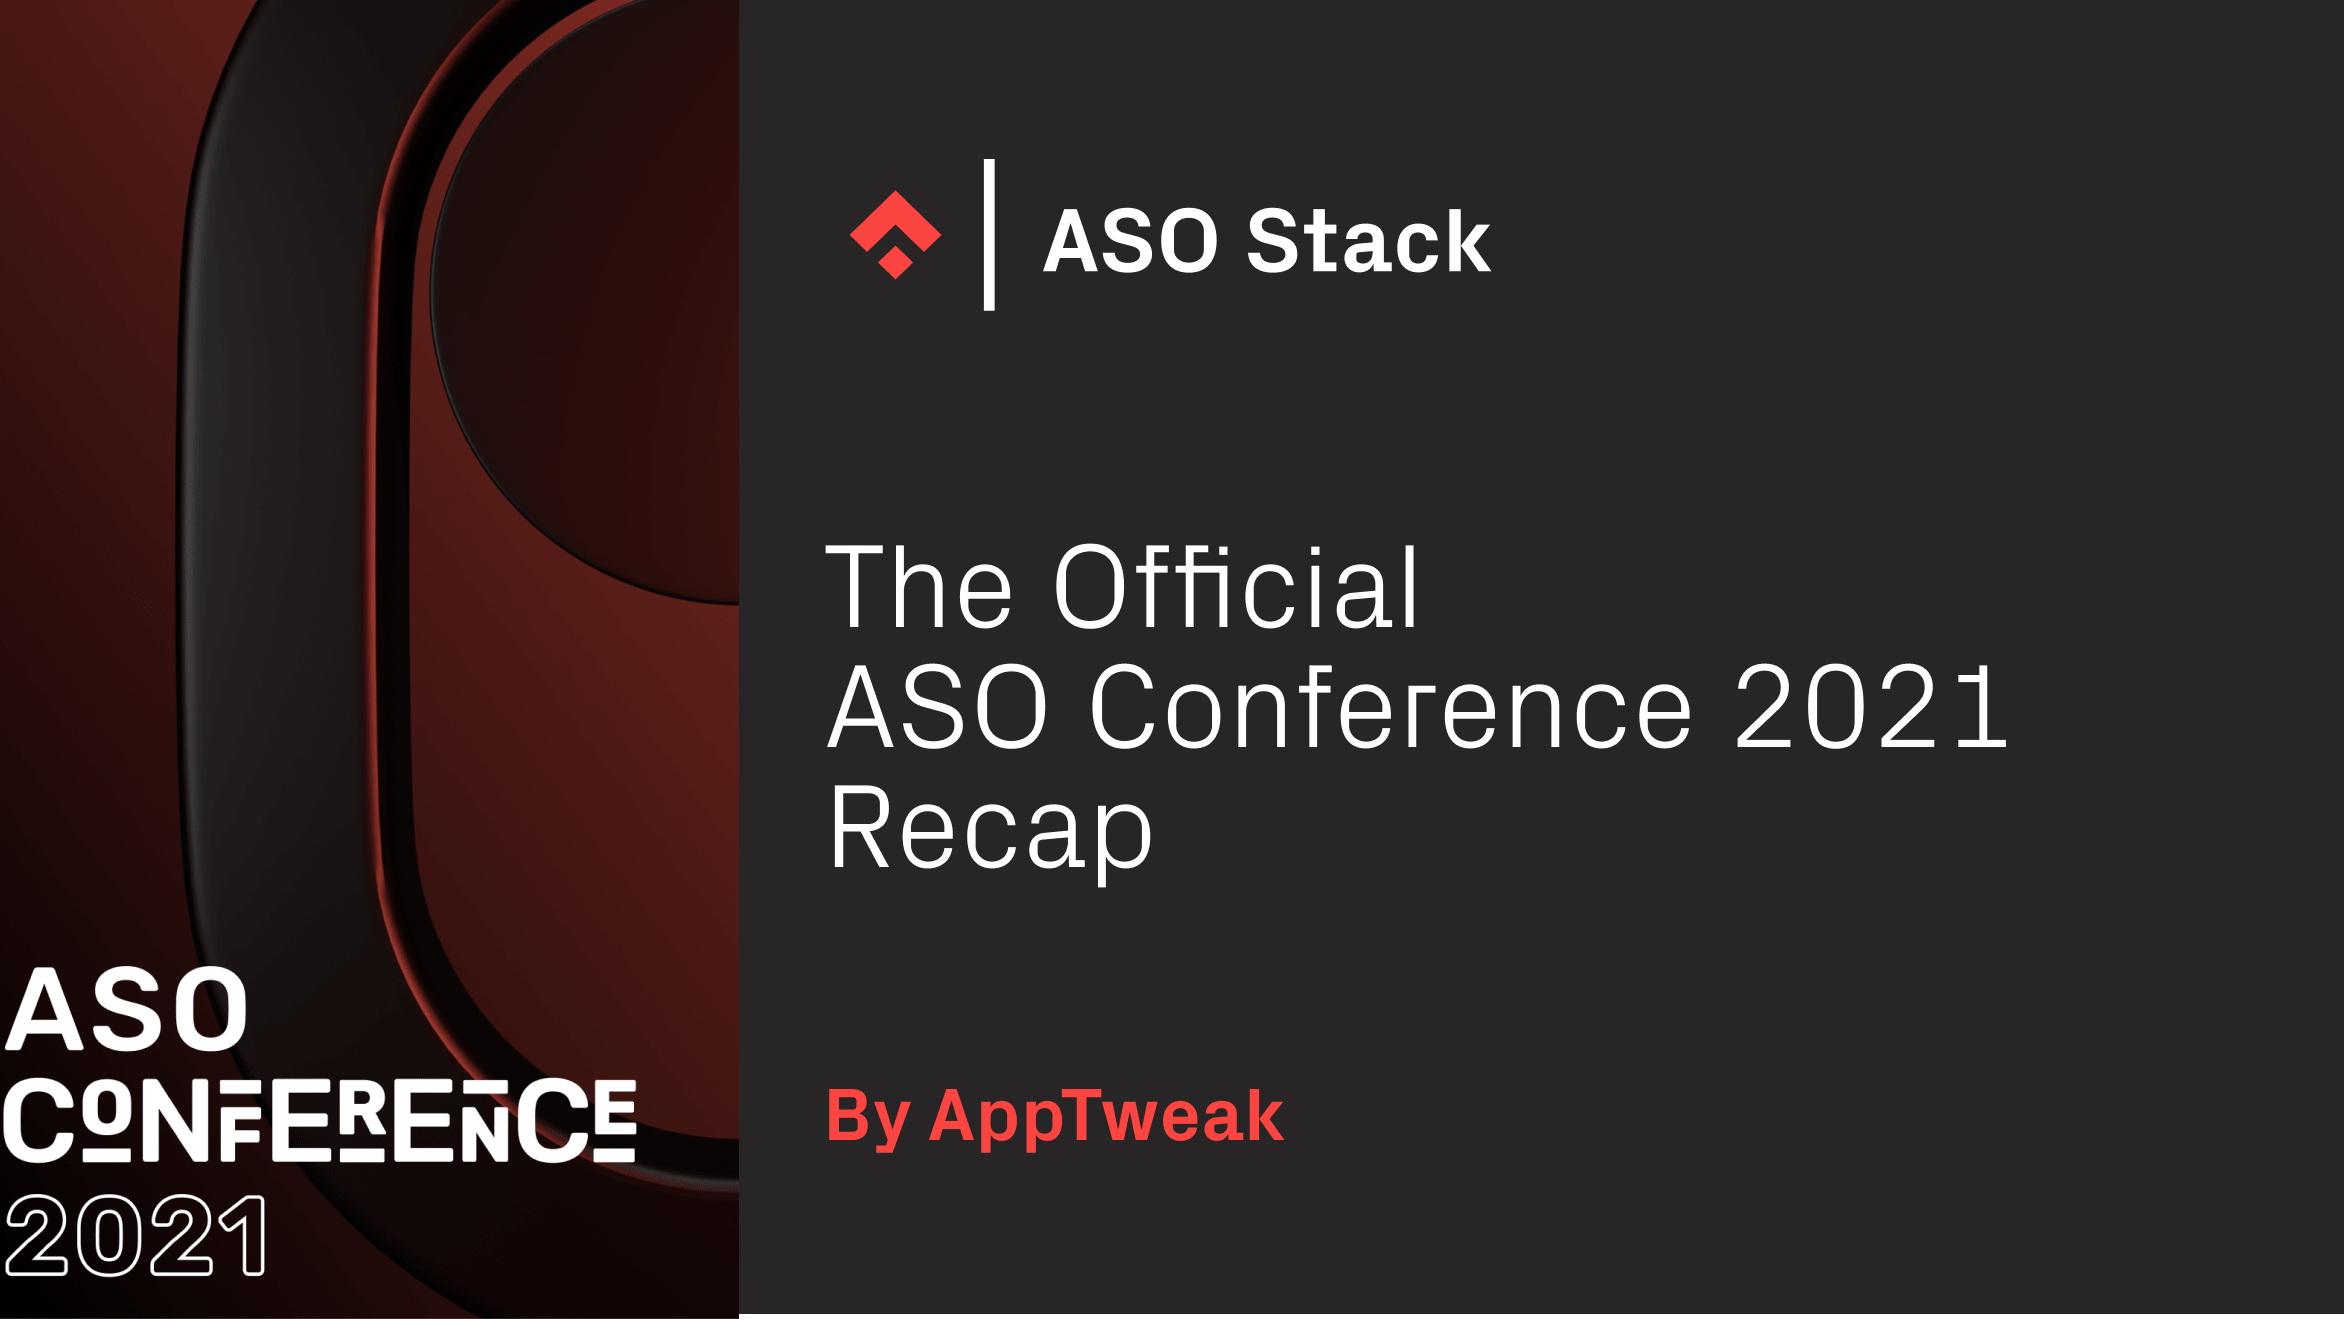 The official aso conference 2021 recap